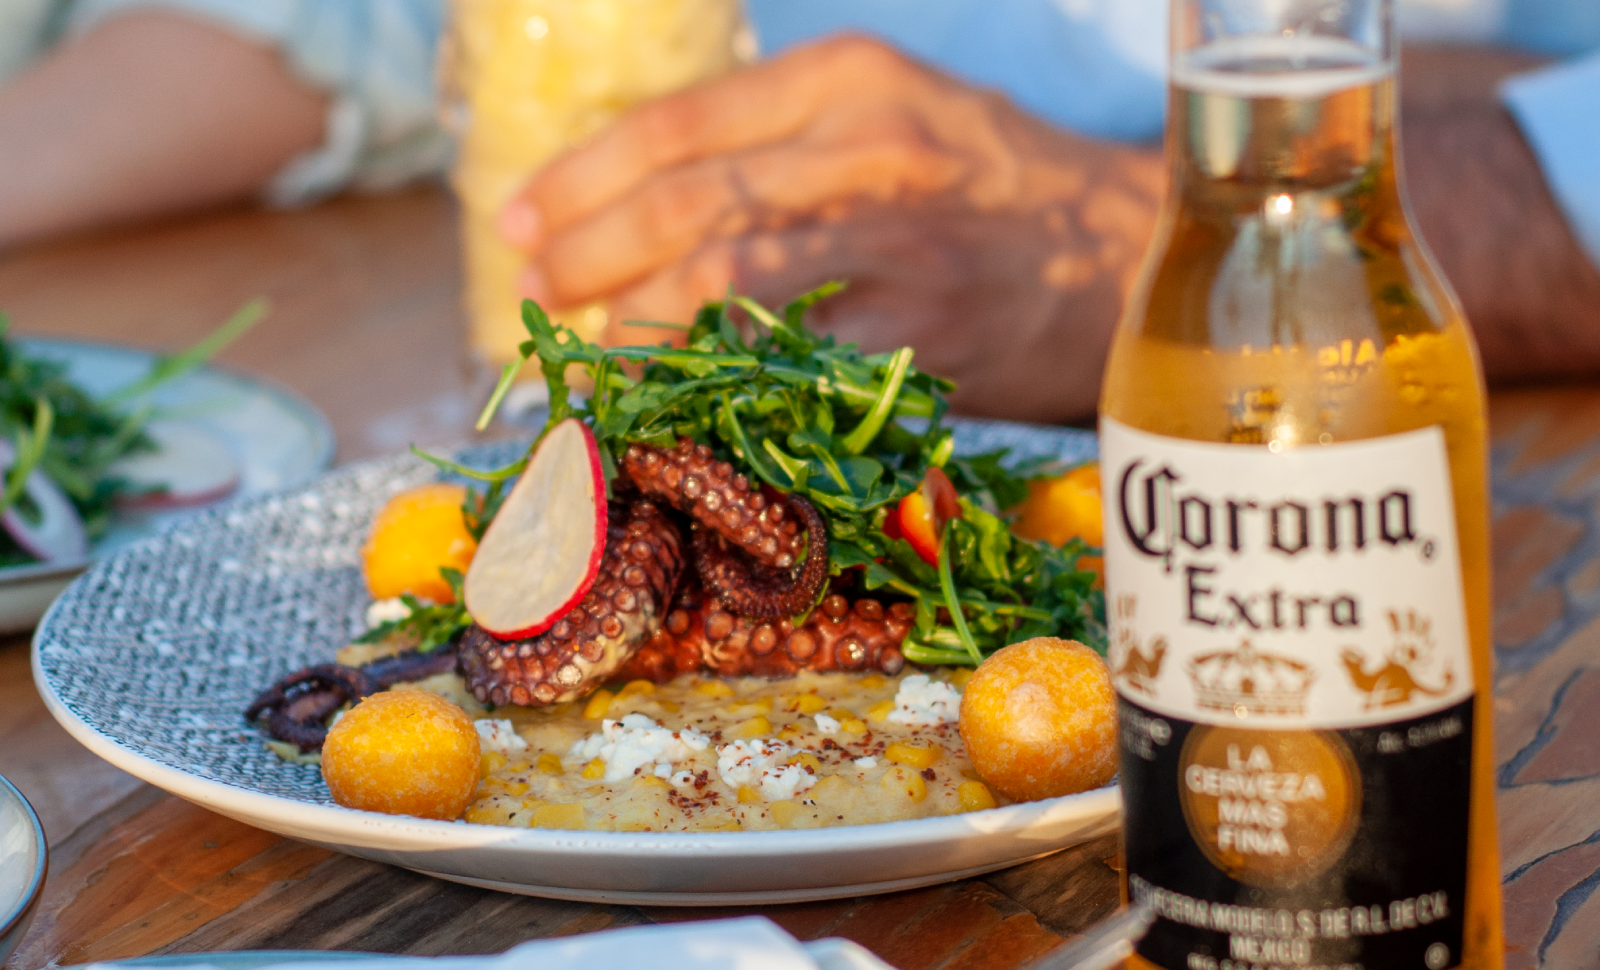 Corona beer and food